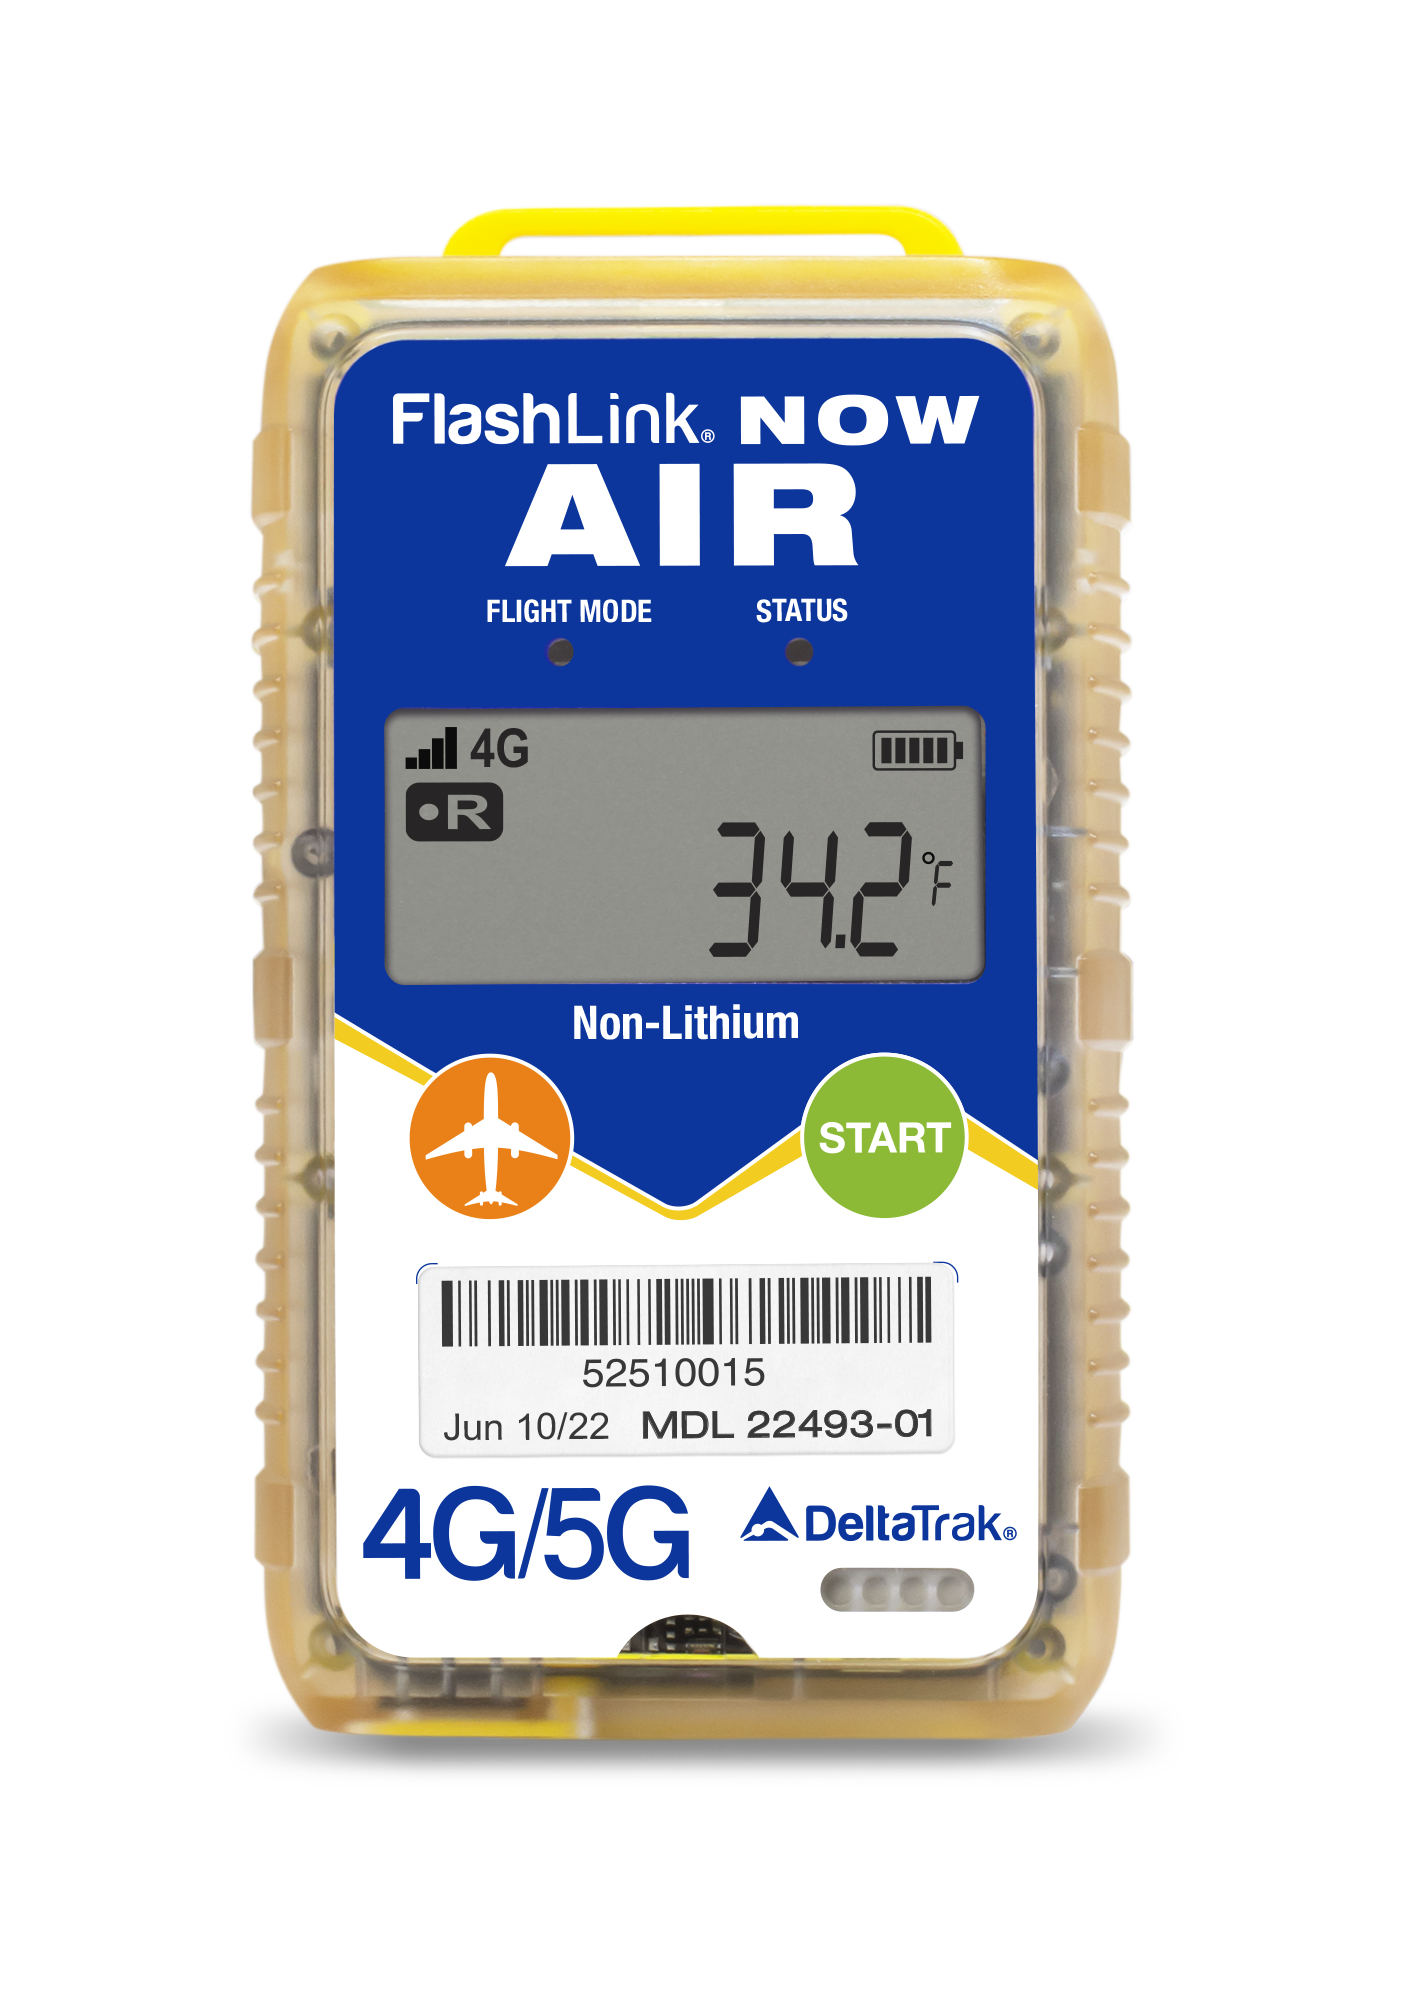 FlashLink® AIR 4G/5G Real-Time In-Transit Logger, Model 22493-01